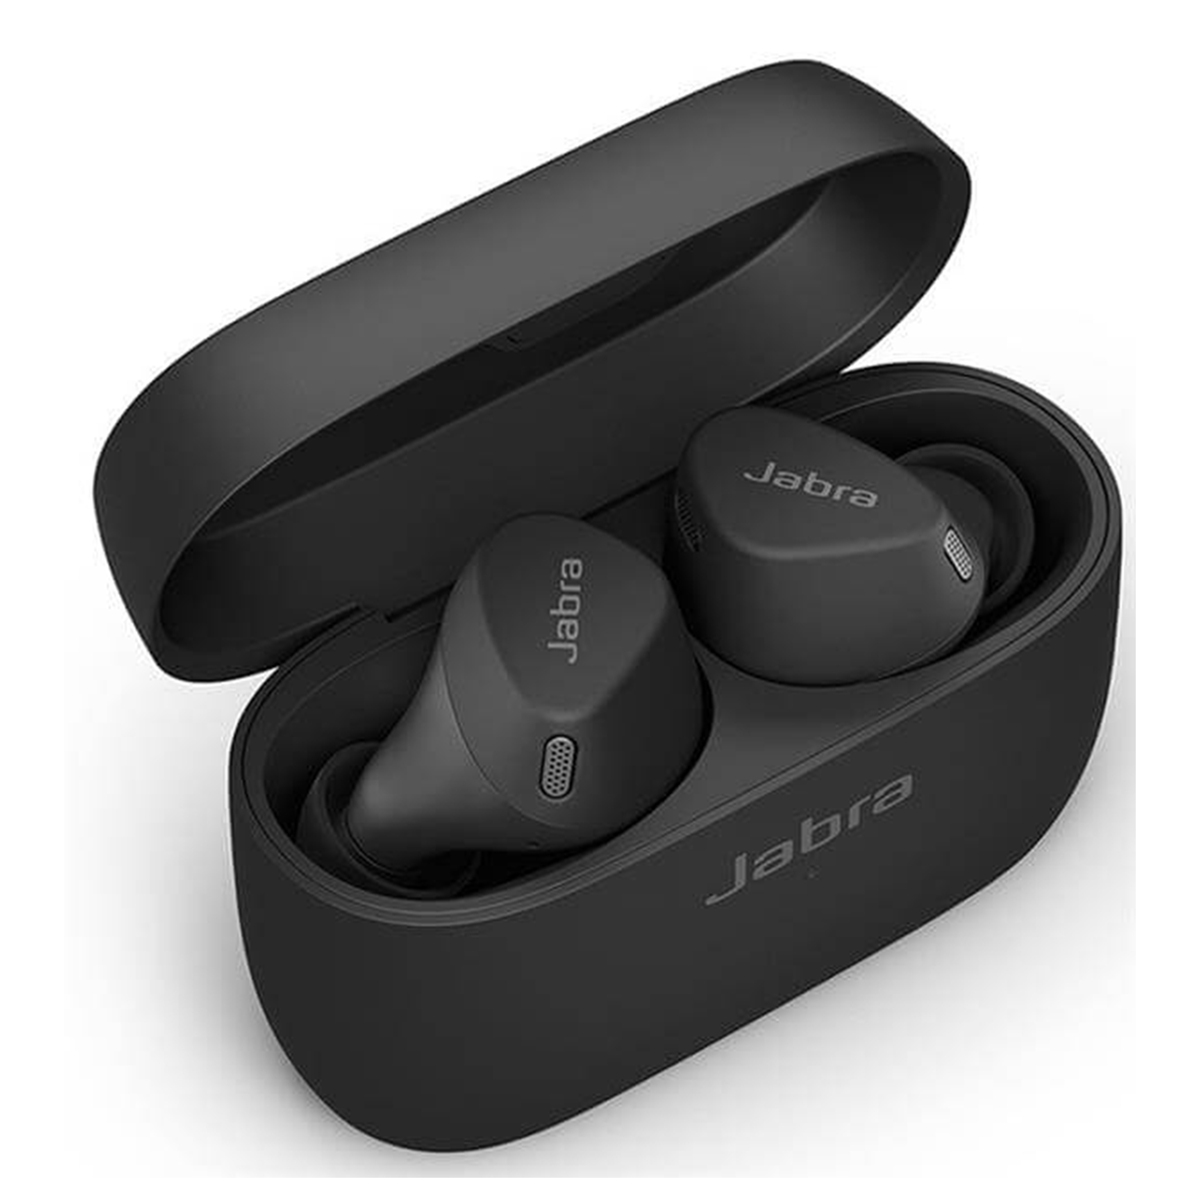 Jabra Elite 4 Active True Wireless Earbuds Black